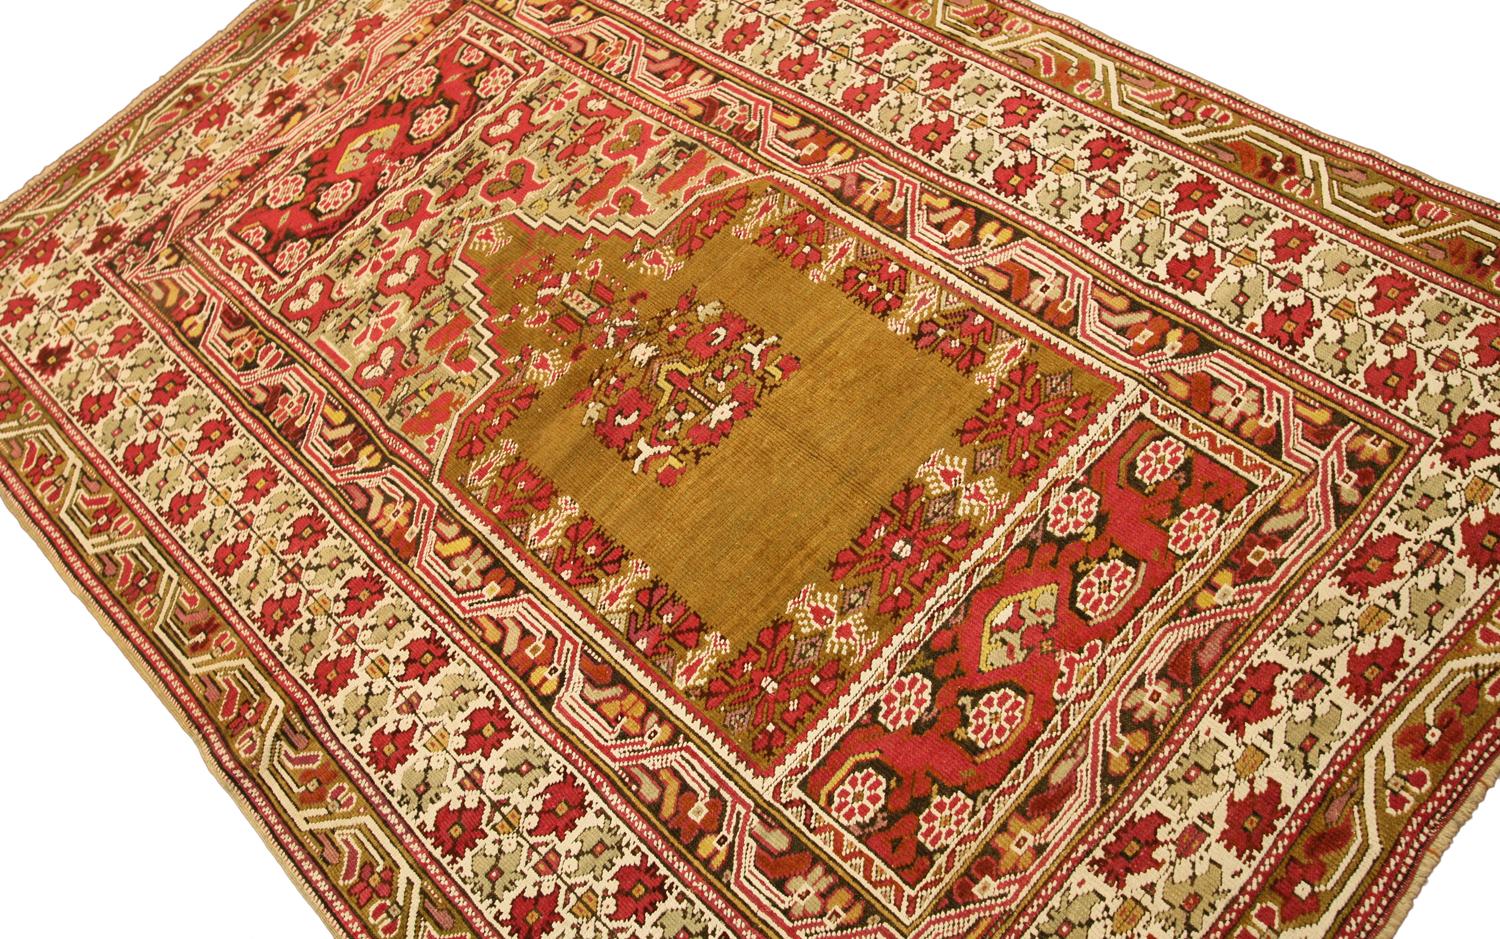 Antique Turkish Beige & Red Wool Ghiordes Rug, 1880-1900 In Good Condition For Sale In Ferrara, IT